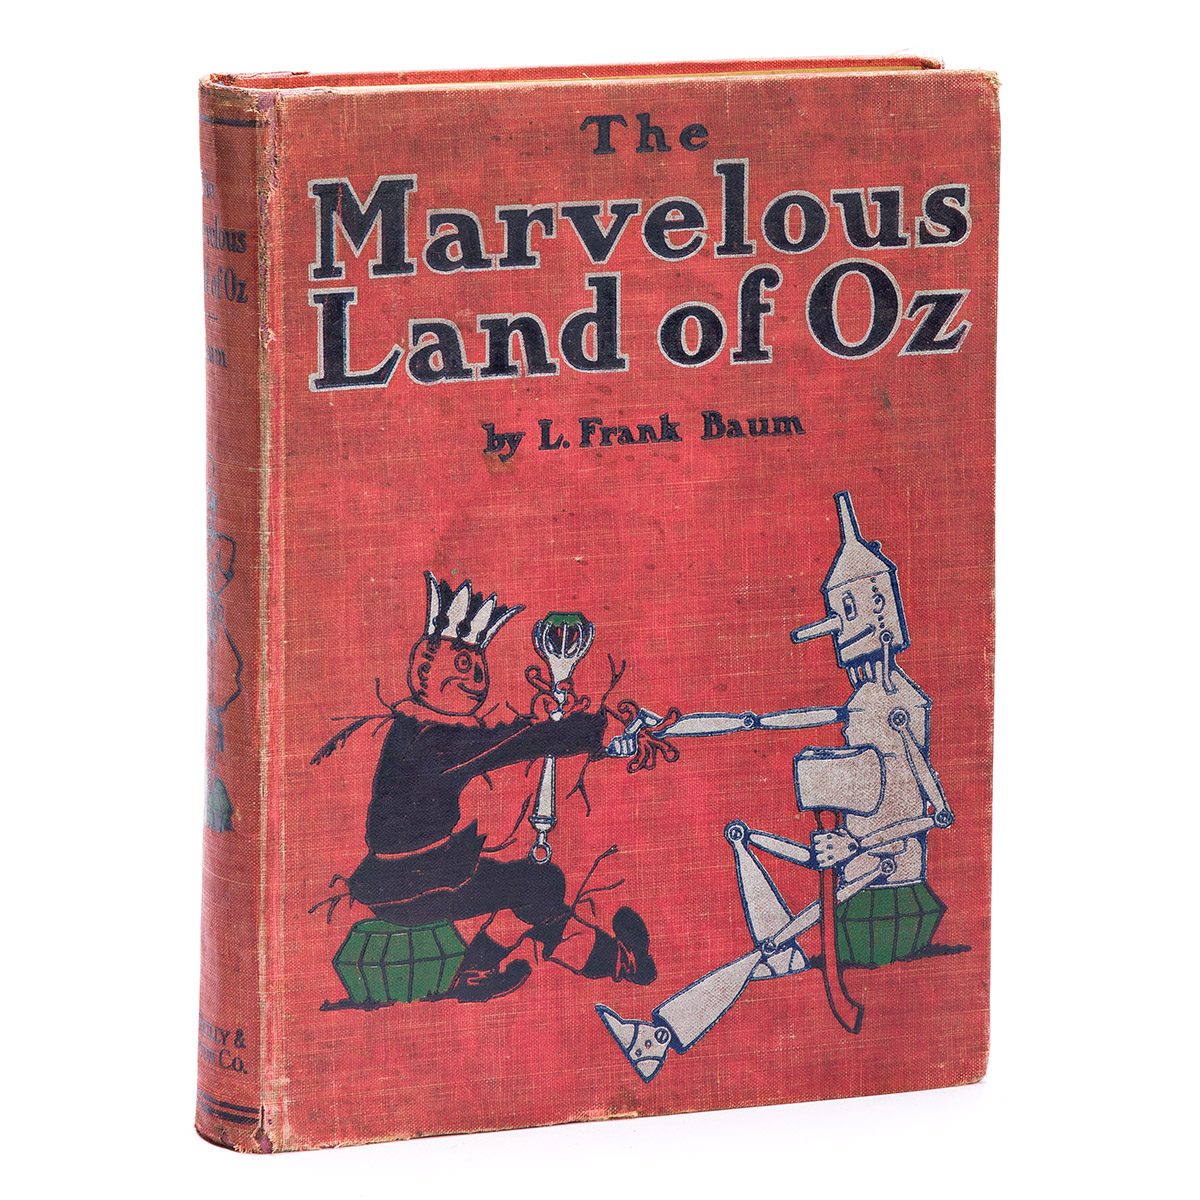 (CHILDRENS LITERATURE.) BAUM, L. FRANK. The Marvelous Land of Oz.